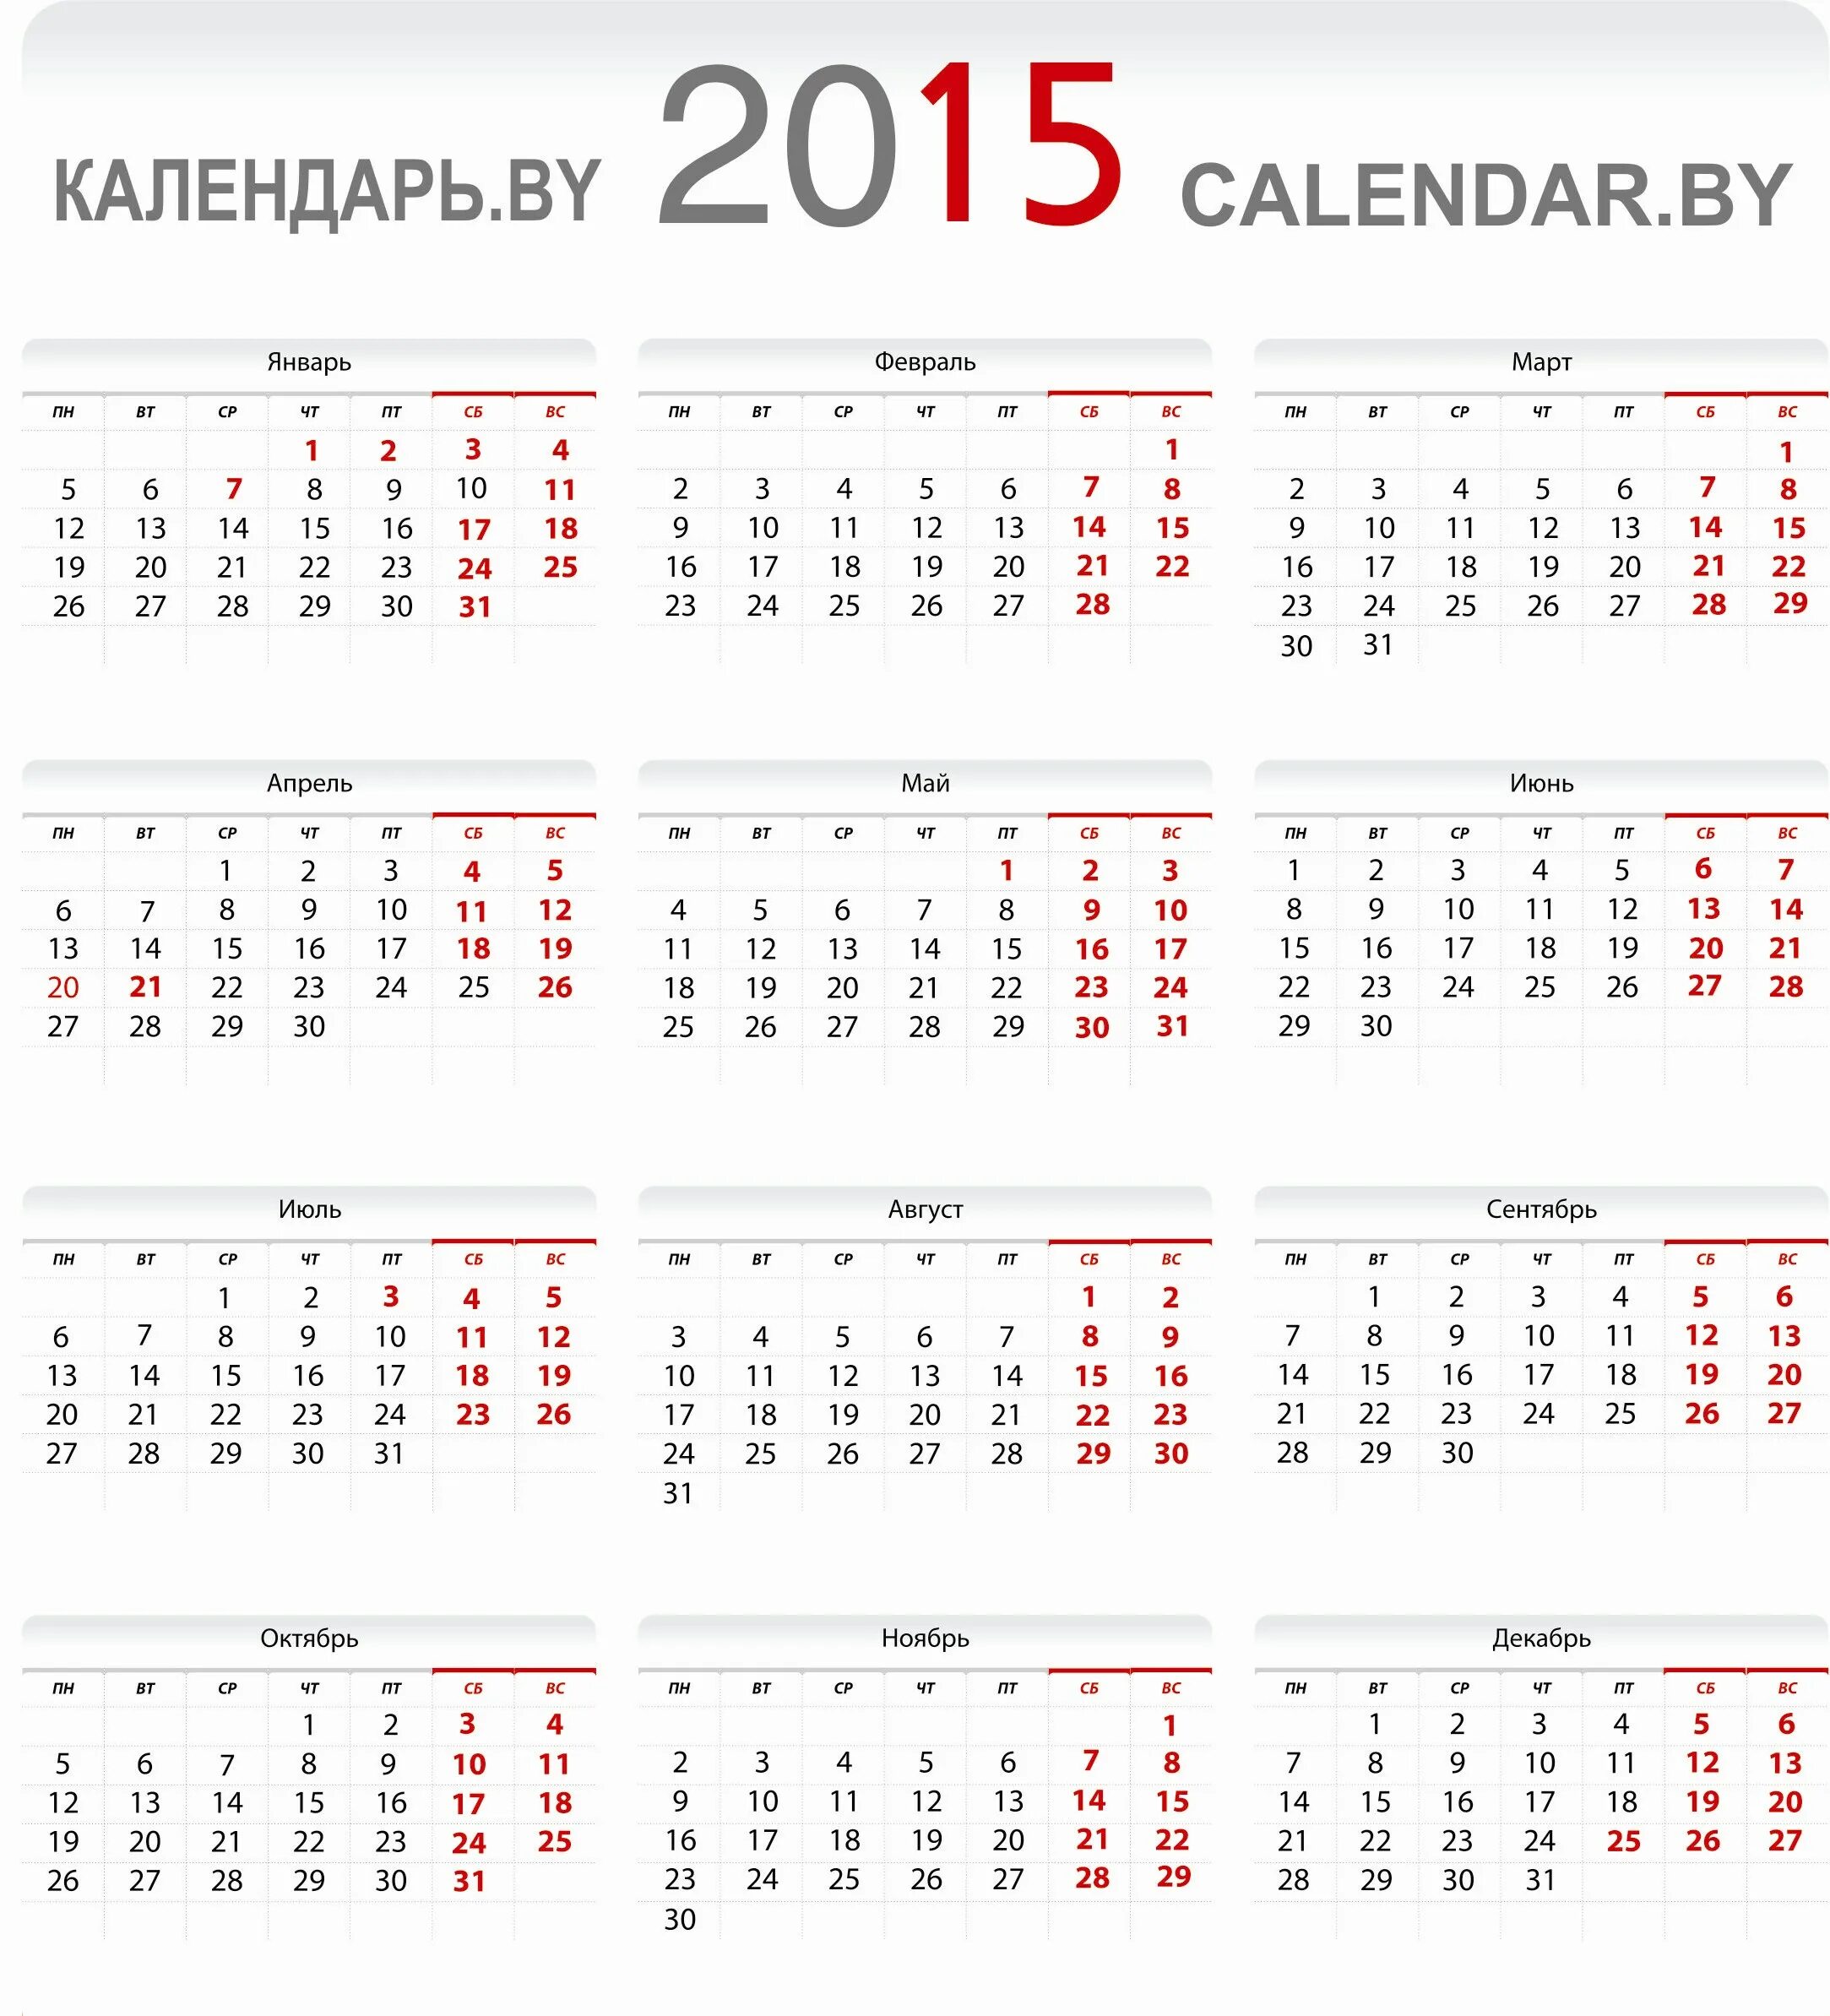 2014 2015 году. Календарь 2015. Календарь на 2015 год. Календарь 2015г. Календарь 2015 года по месяцам.